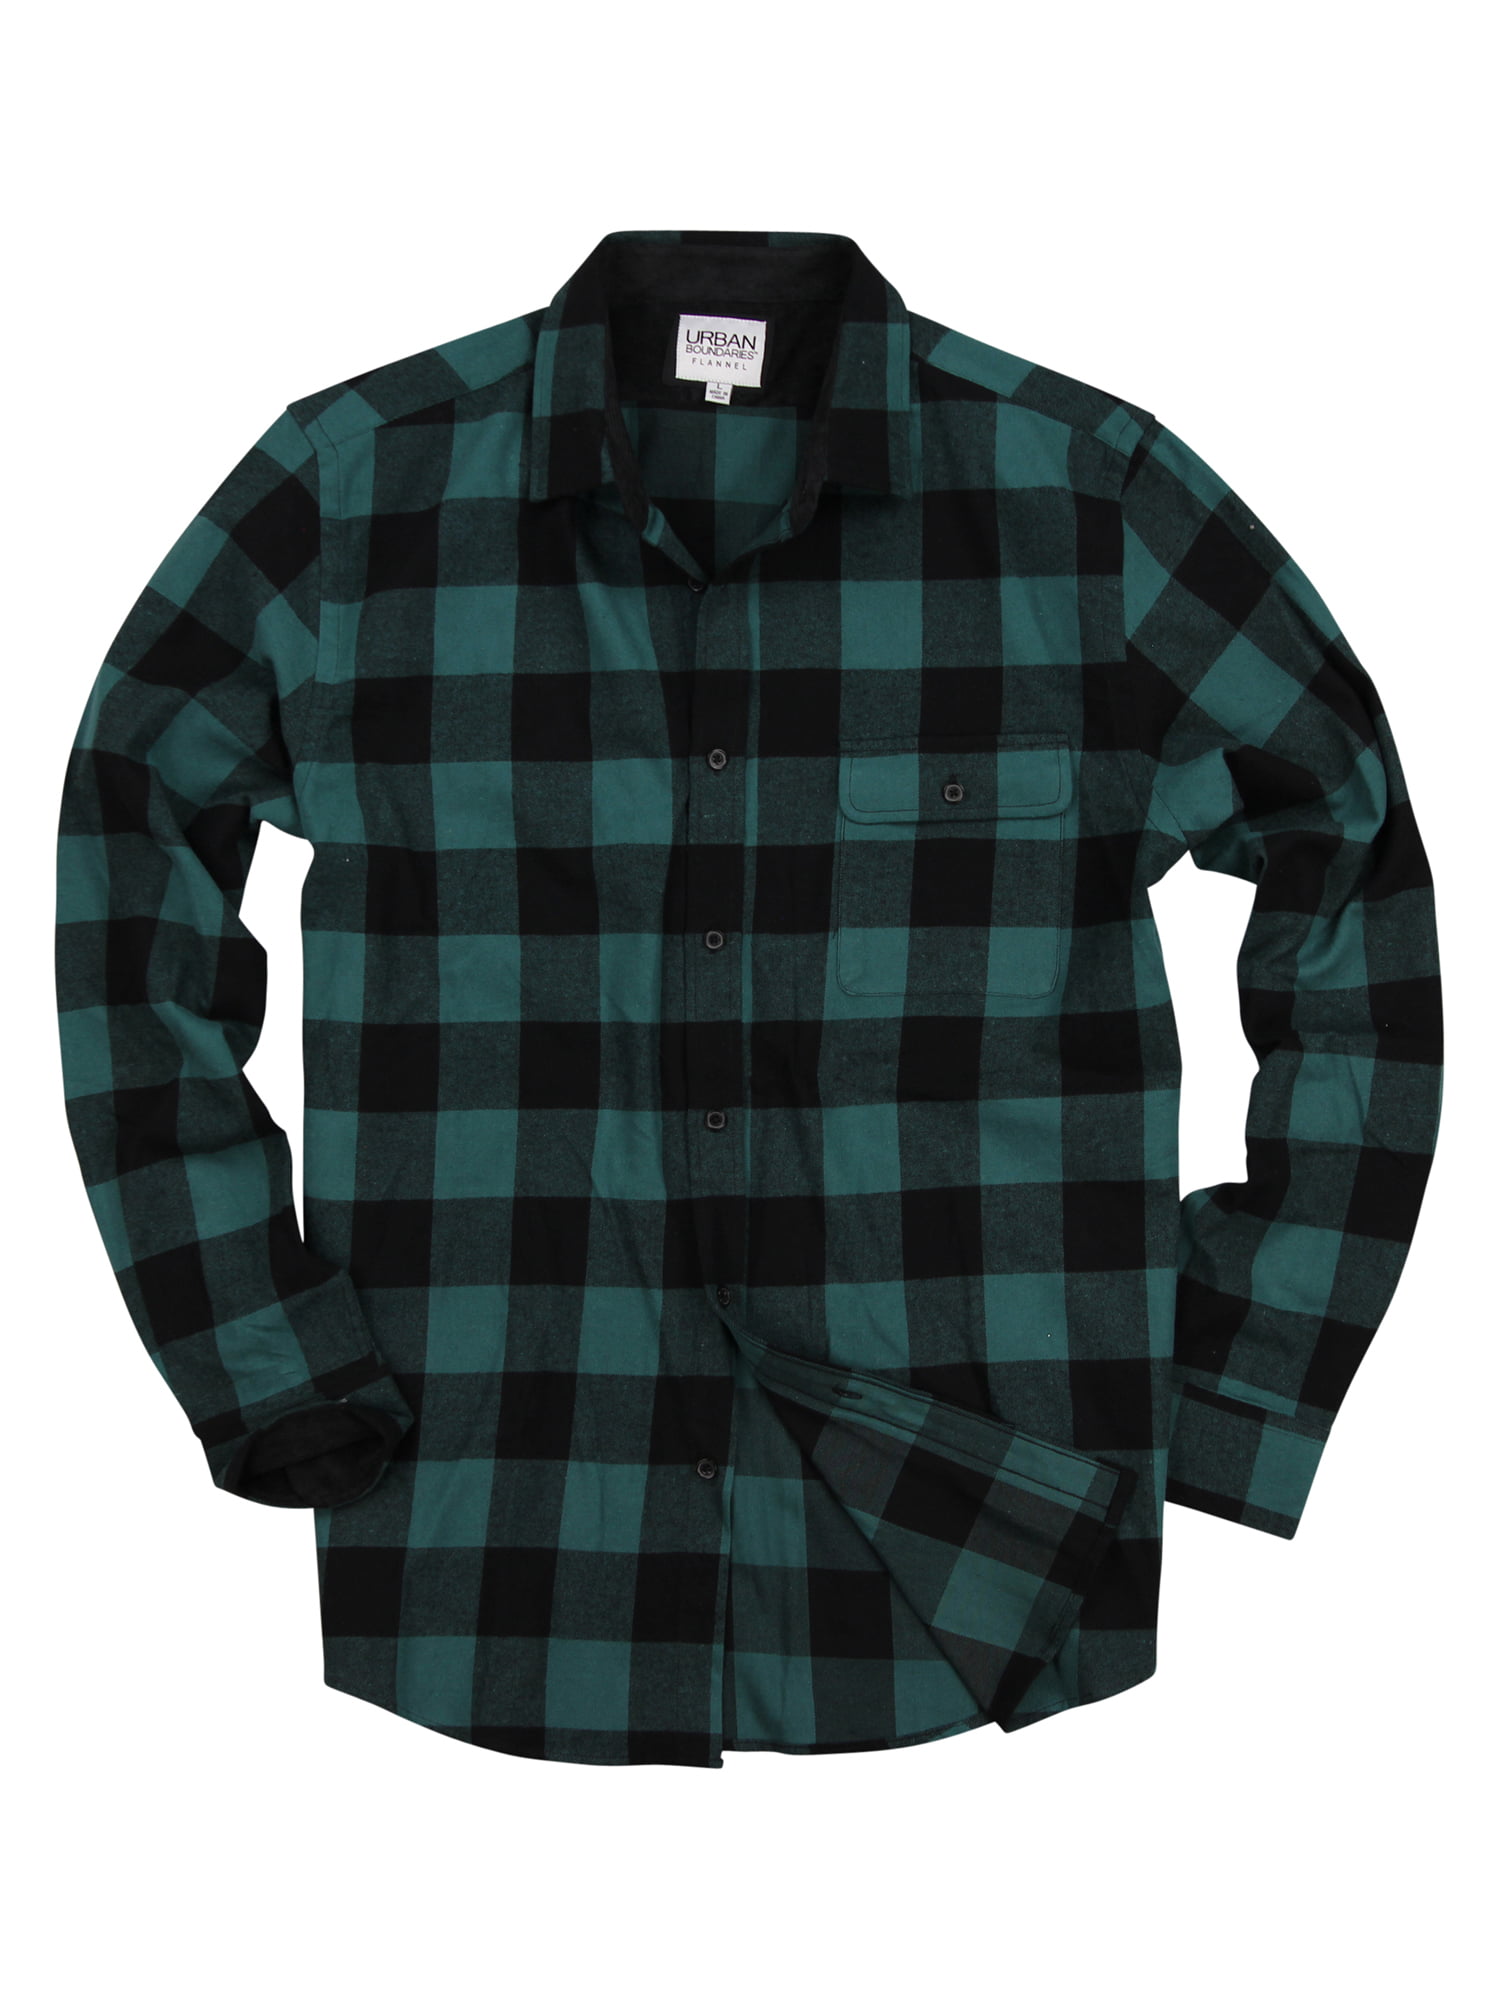 Urban Boundaries - Men's Long Sleeve Flannel Shirt W/Point Collar ...